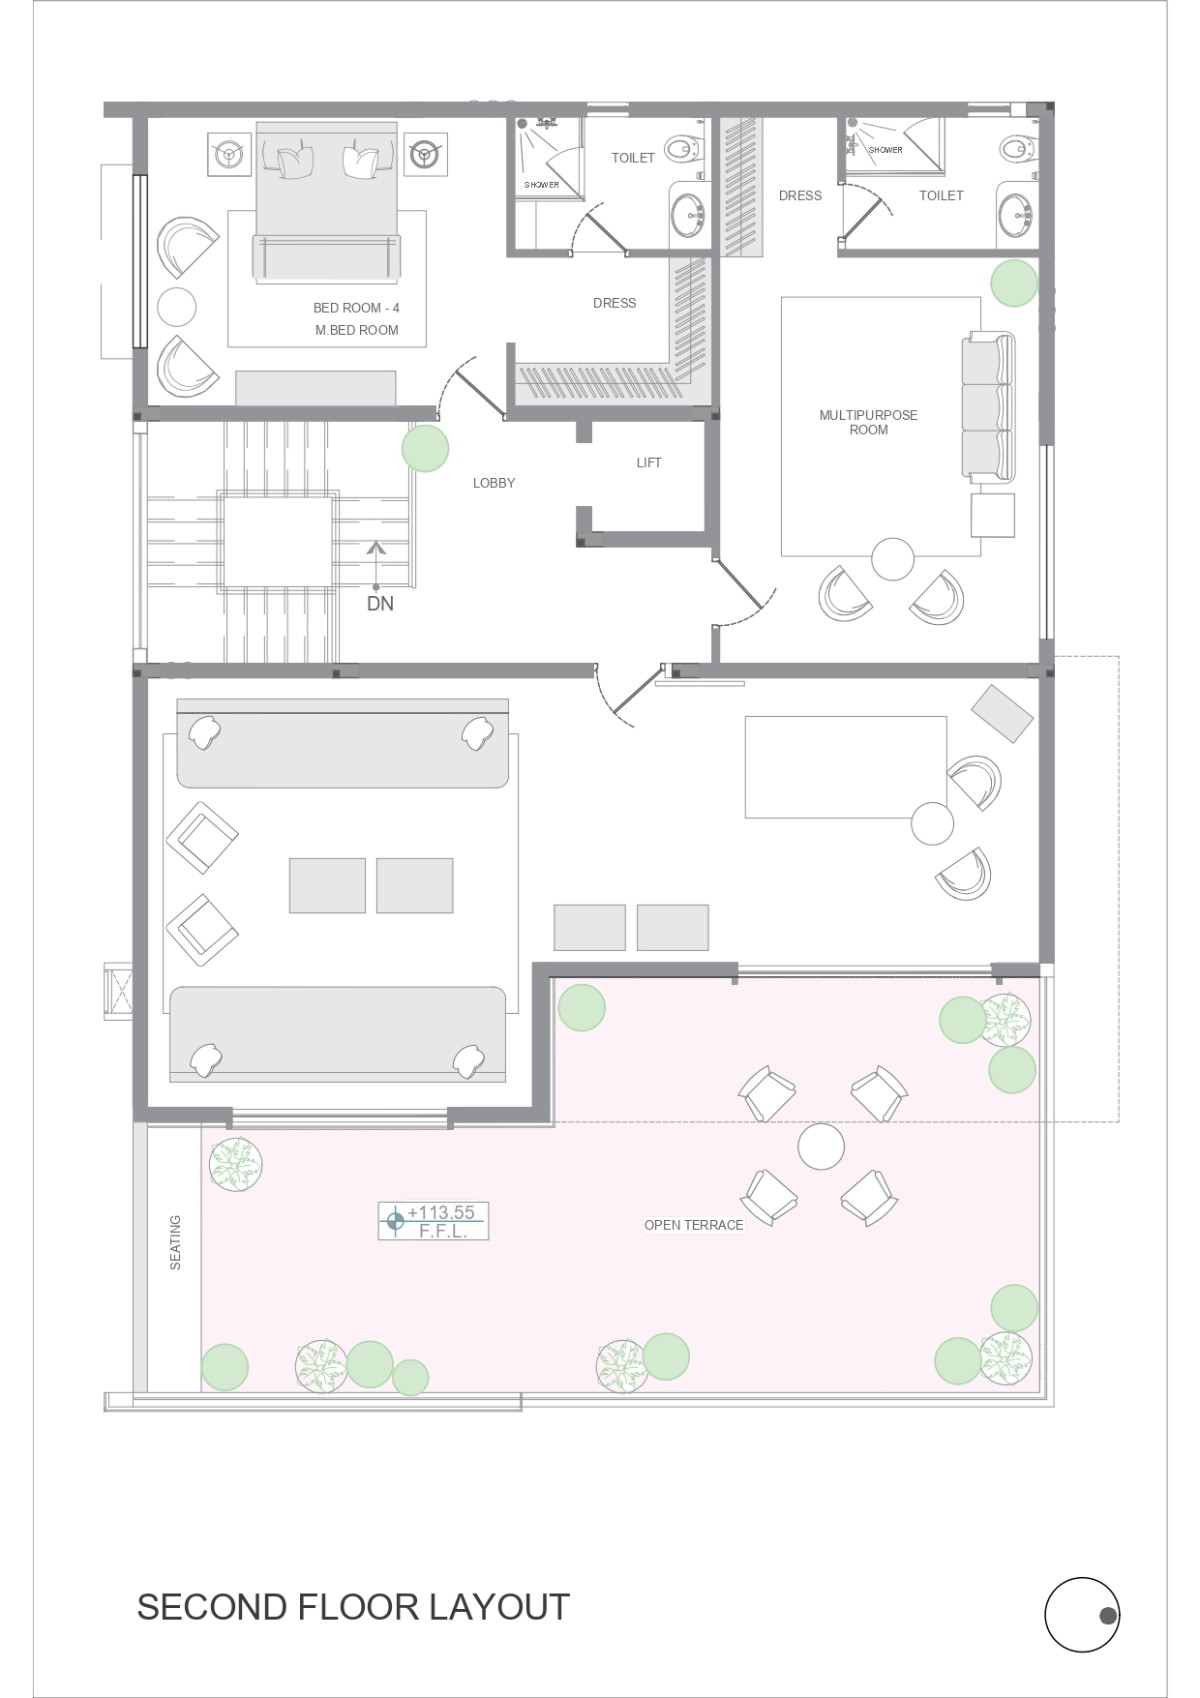 Second floor plan of Ekta Villa by Beyond Spaces Design Studio